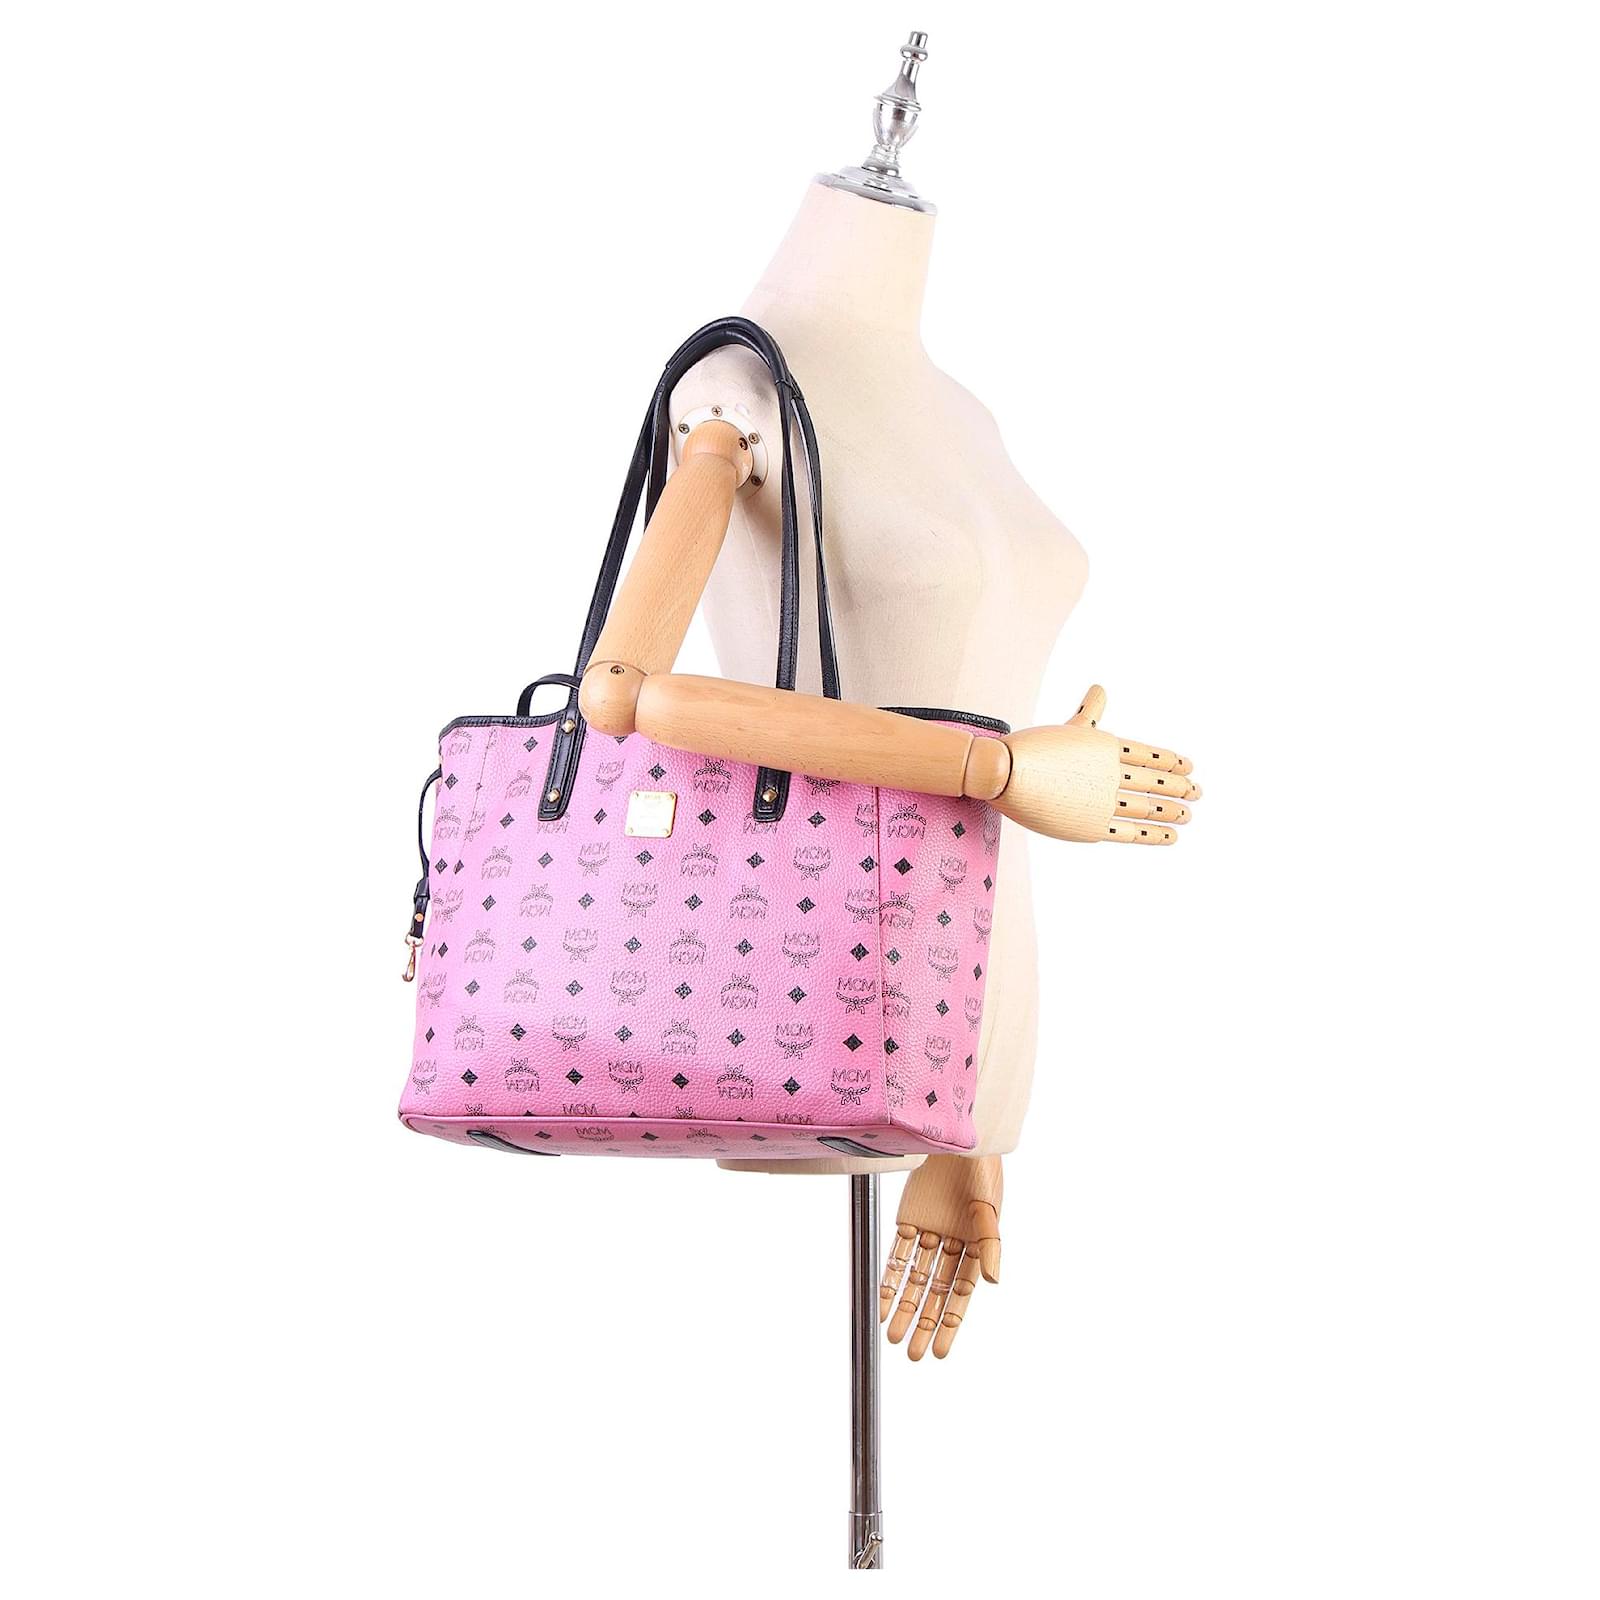 MCM Pink Visetos Reversible Leather Tote Bag Black Pony-style